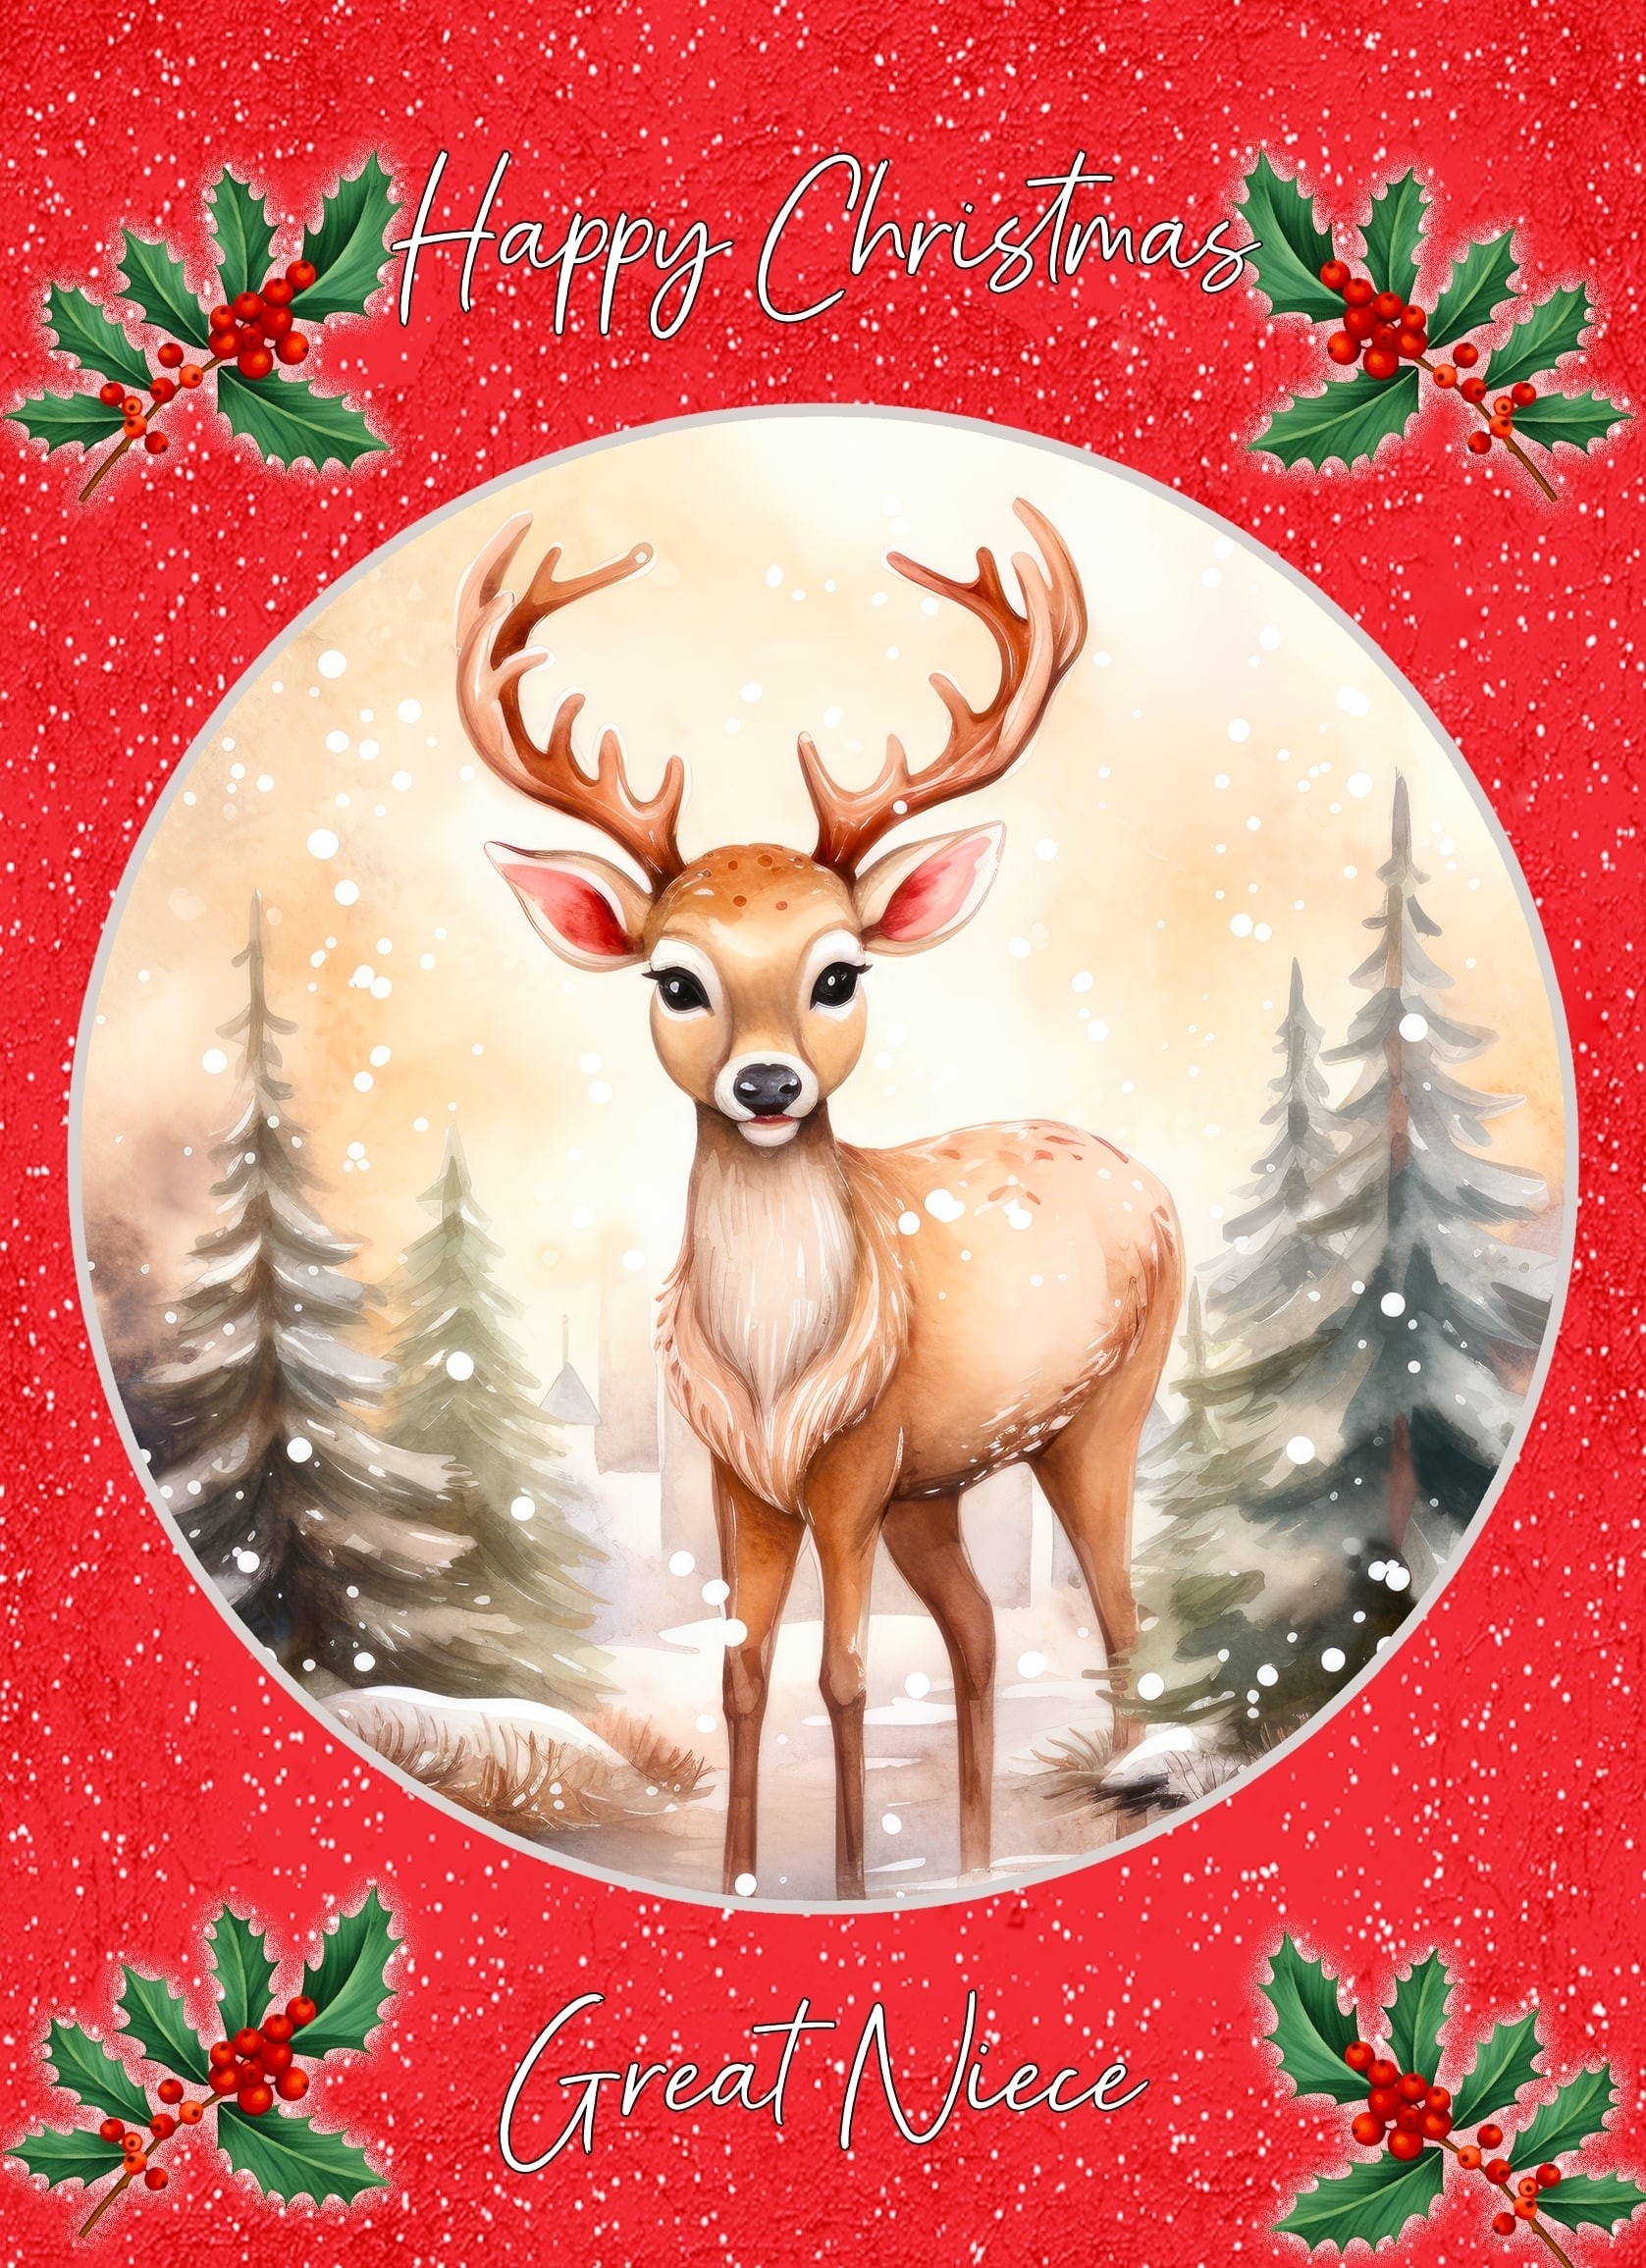 Christmas Card For Great Niece (Globe, Deer)